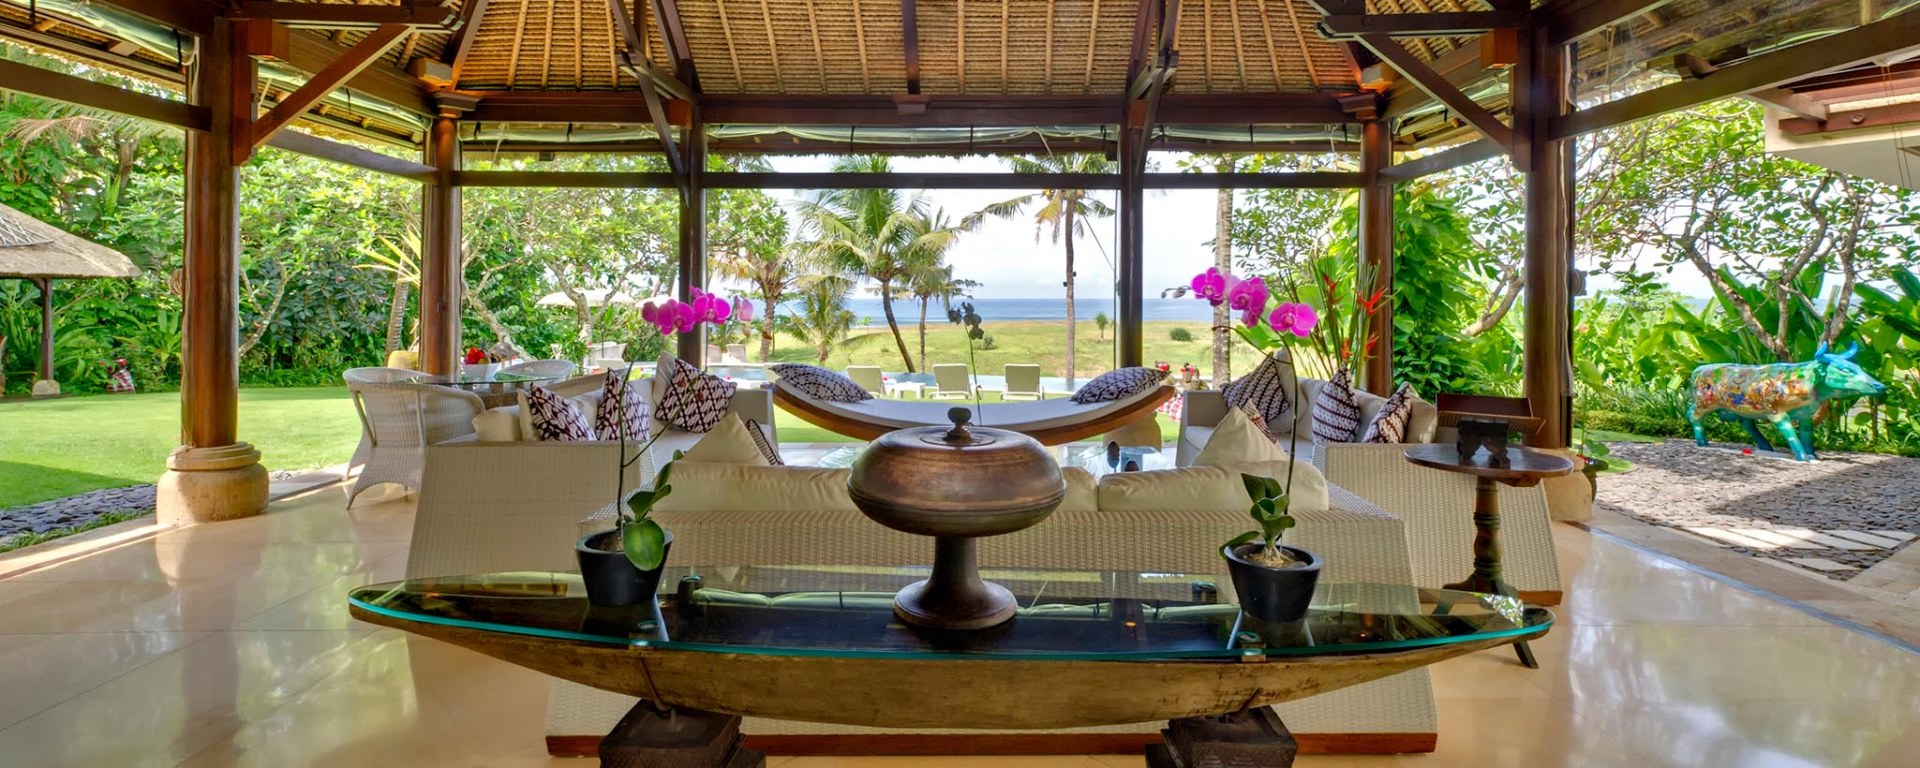 Temptation Island Villa Bali - Sungai Tinggi Beach Villa